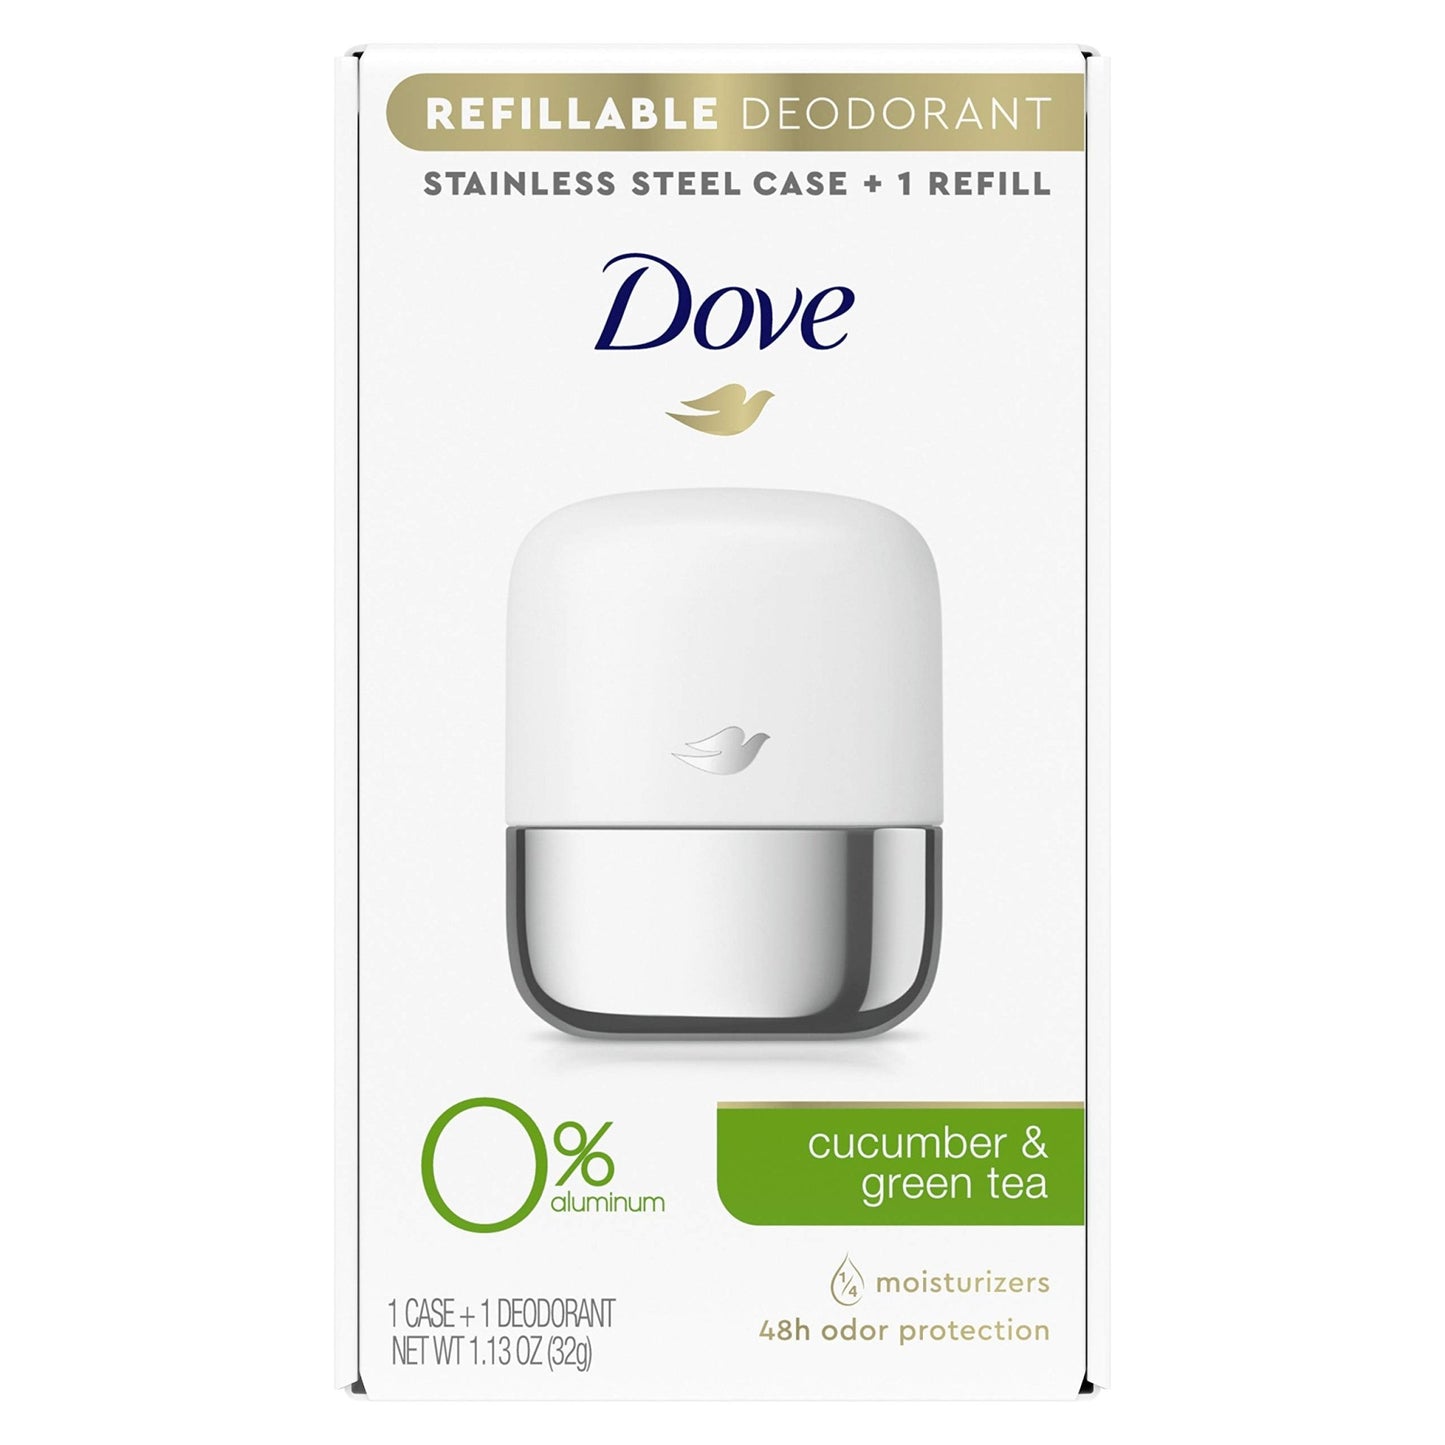 Dove Refillable Deodorant Starter Kit 0% Aluminum Cucumber & Green Tea Aluminum Free Deodorant 1.13 oz